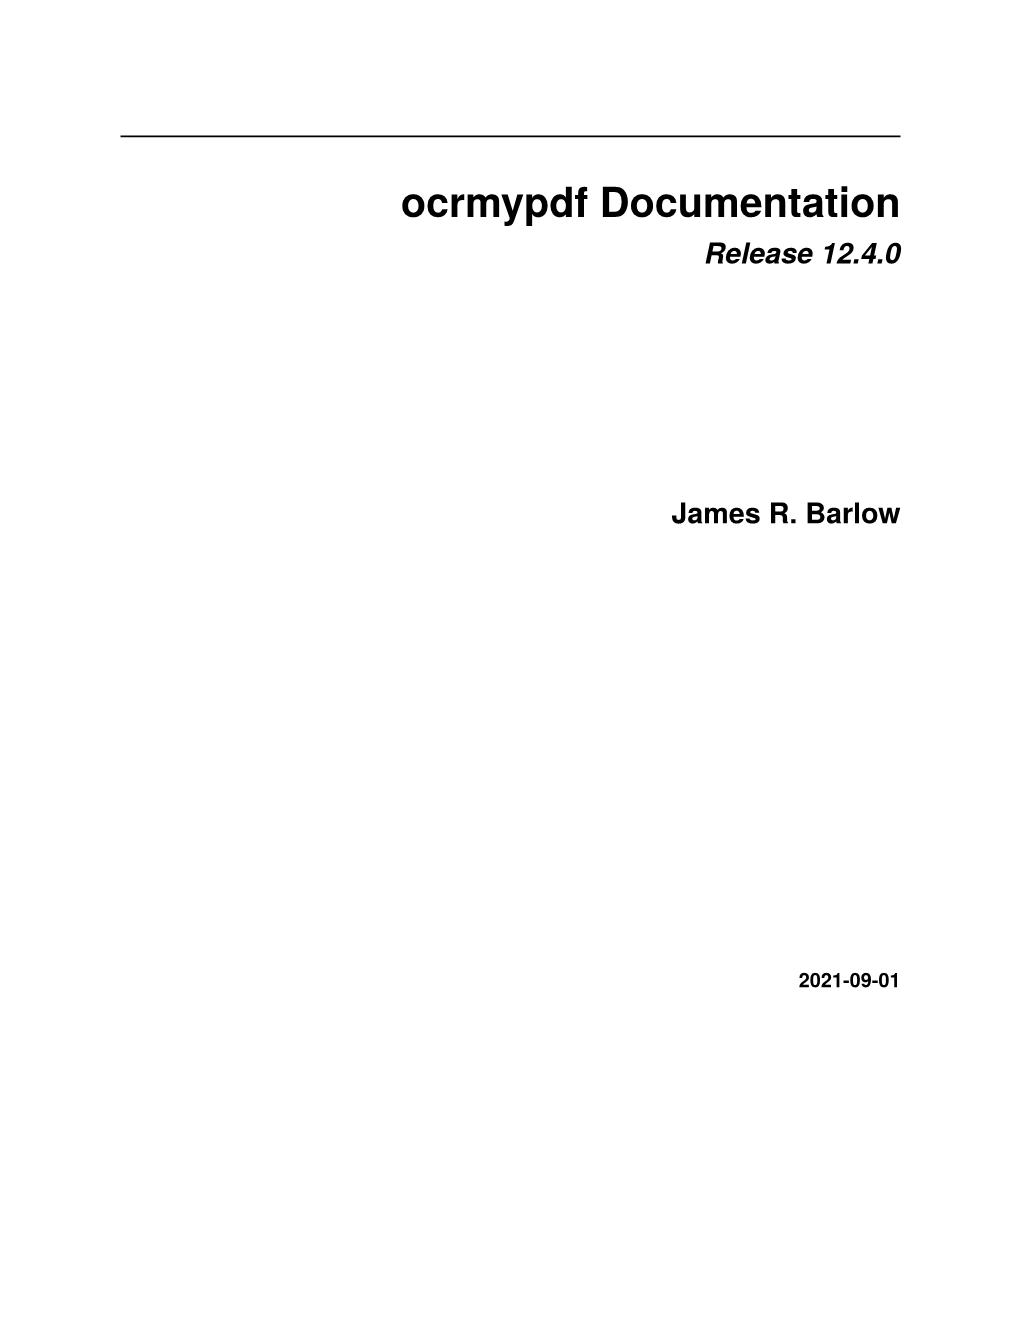 Ocrmypdf Documentation Release 12.4.0